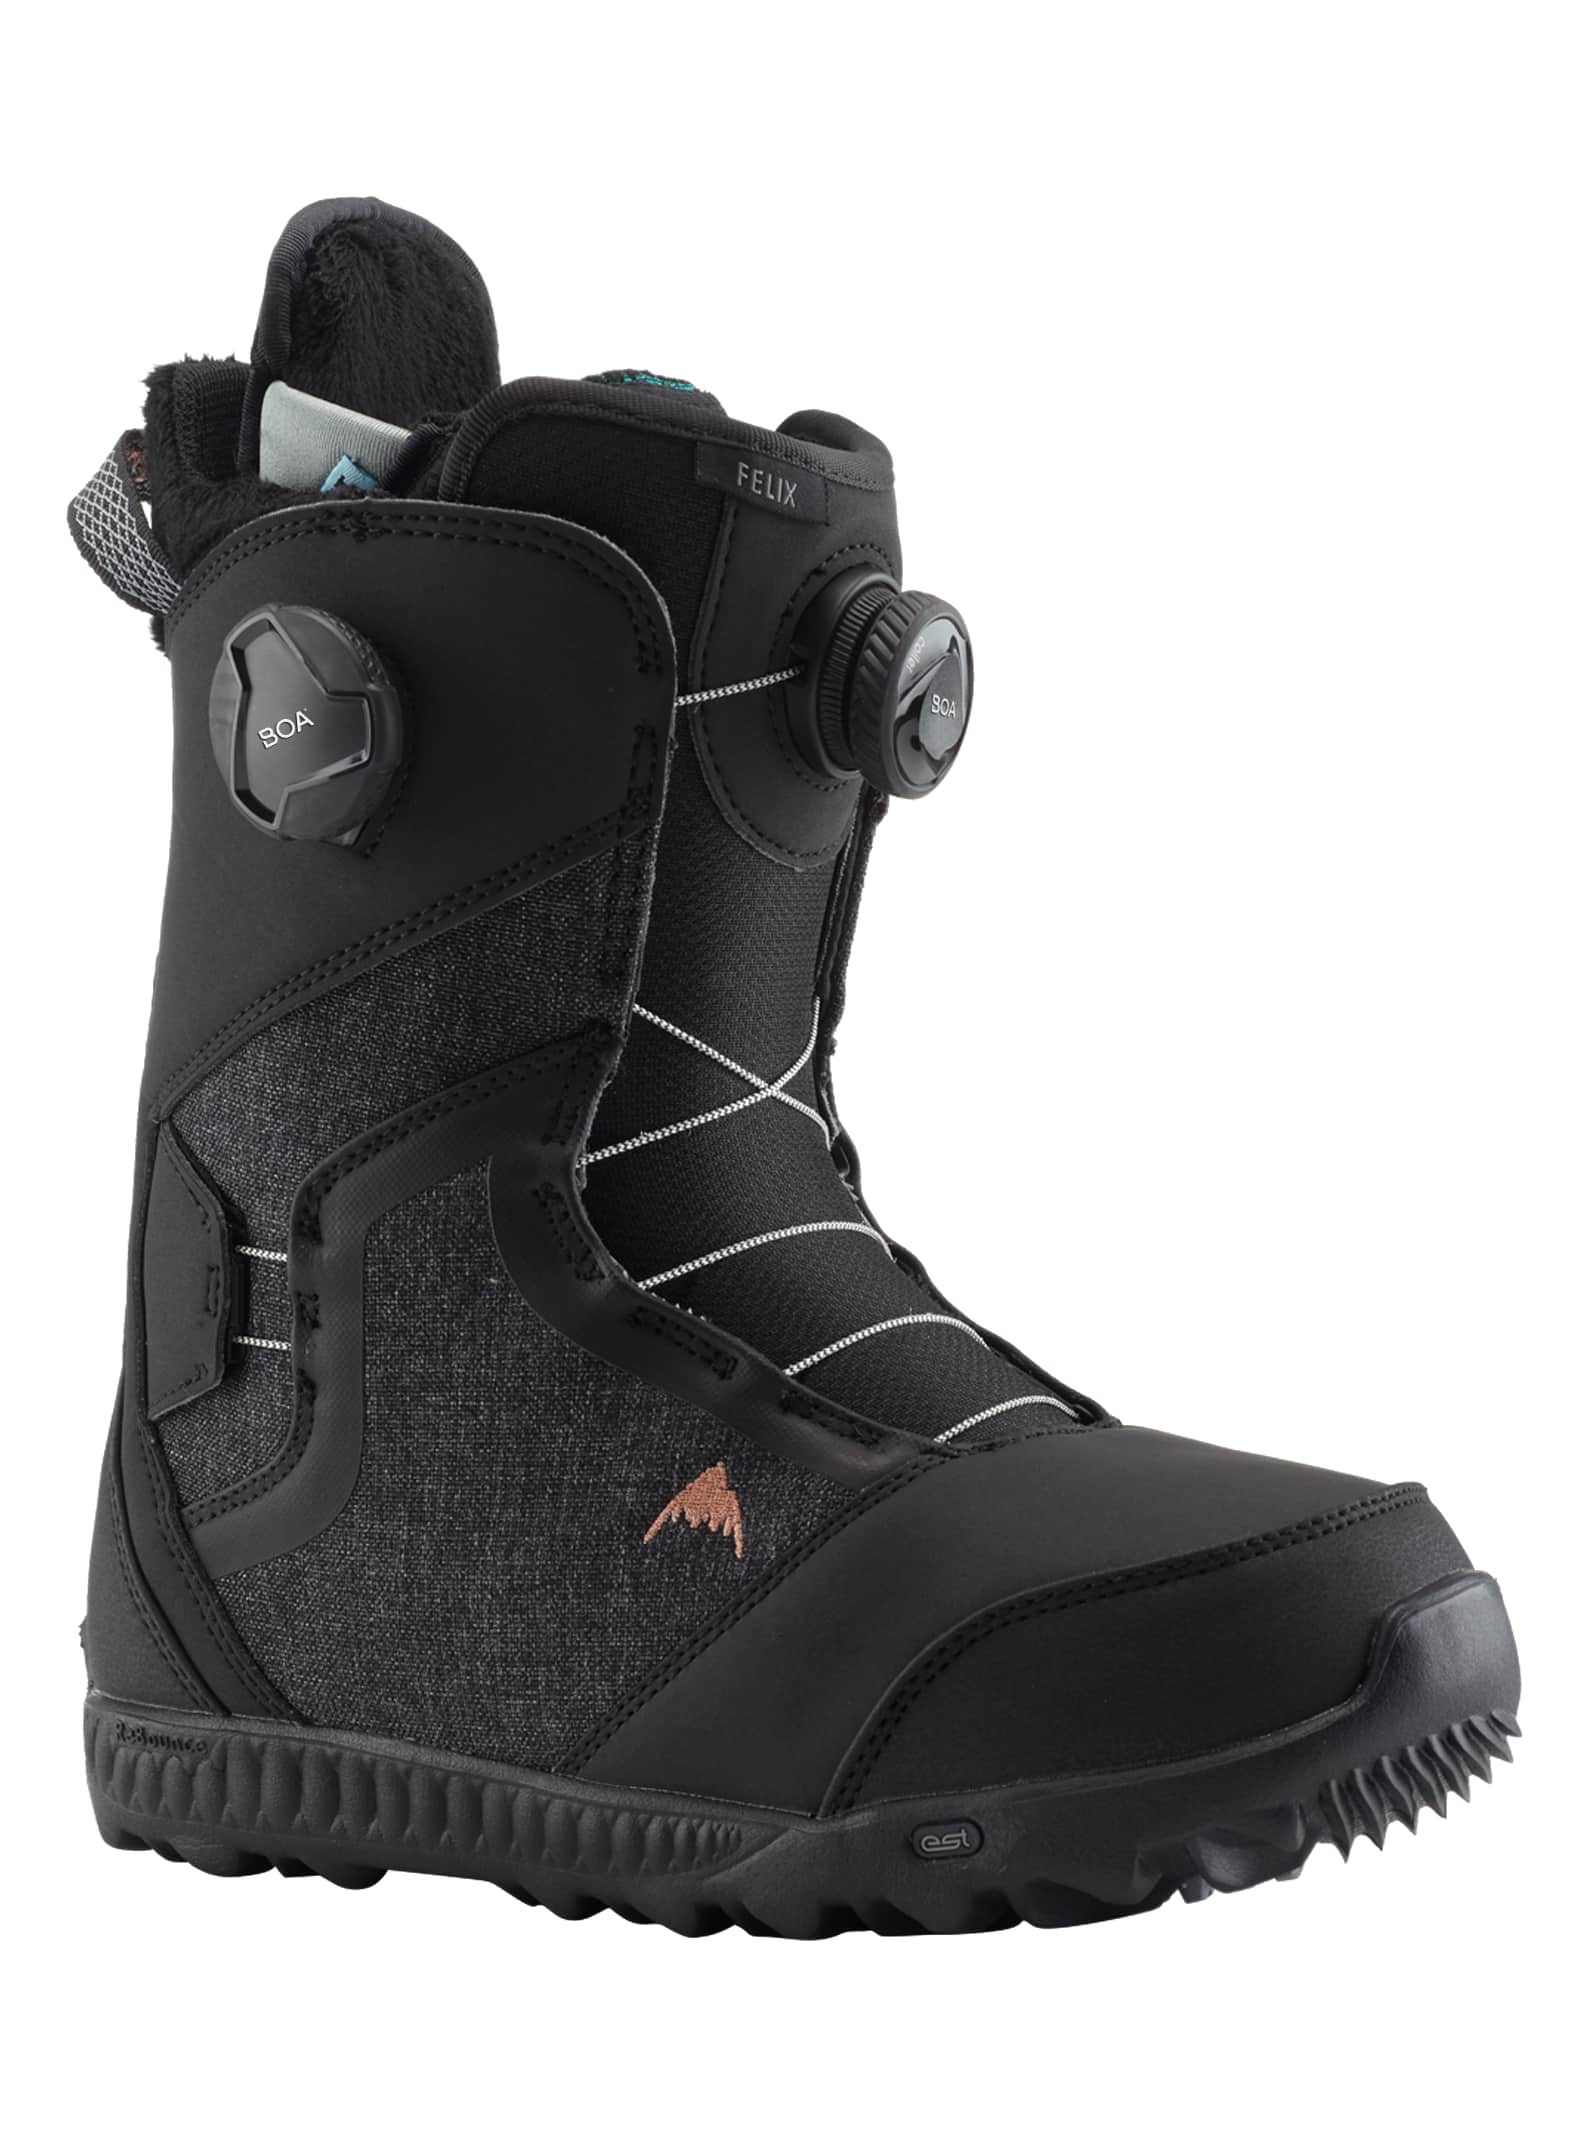 Burton Felix Boa® Snowboard-Boots für Damen | Burton.com Winter 2020 CH